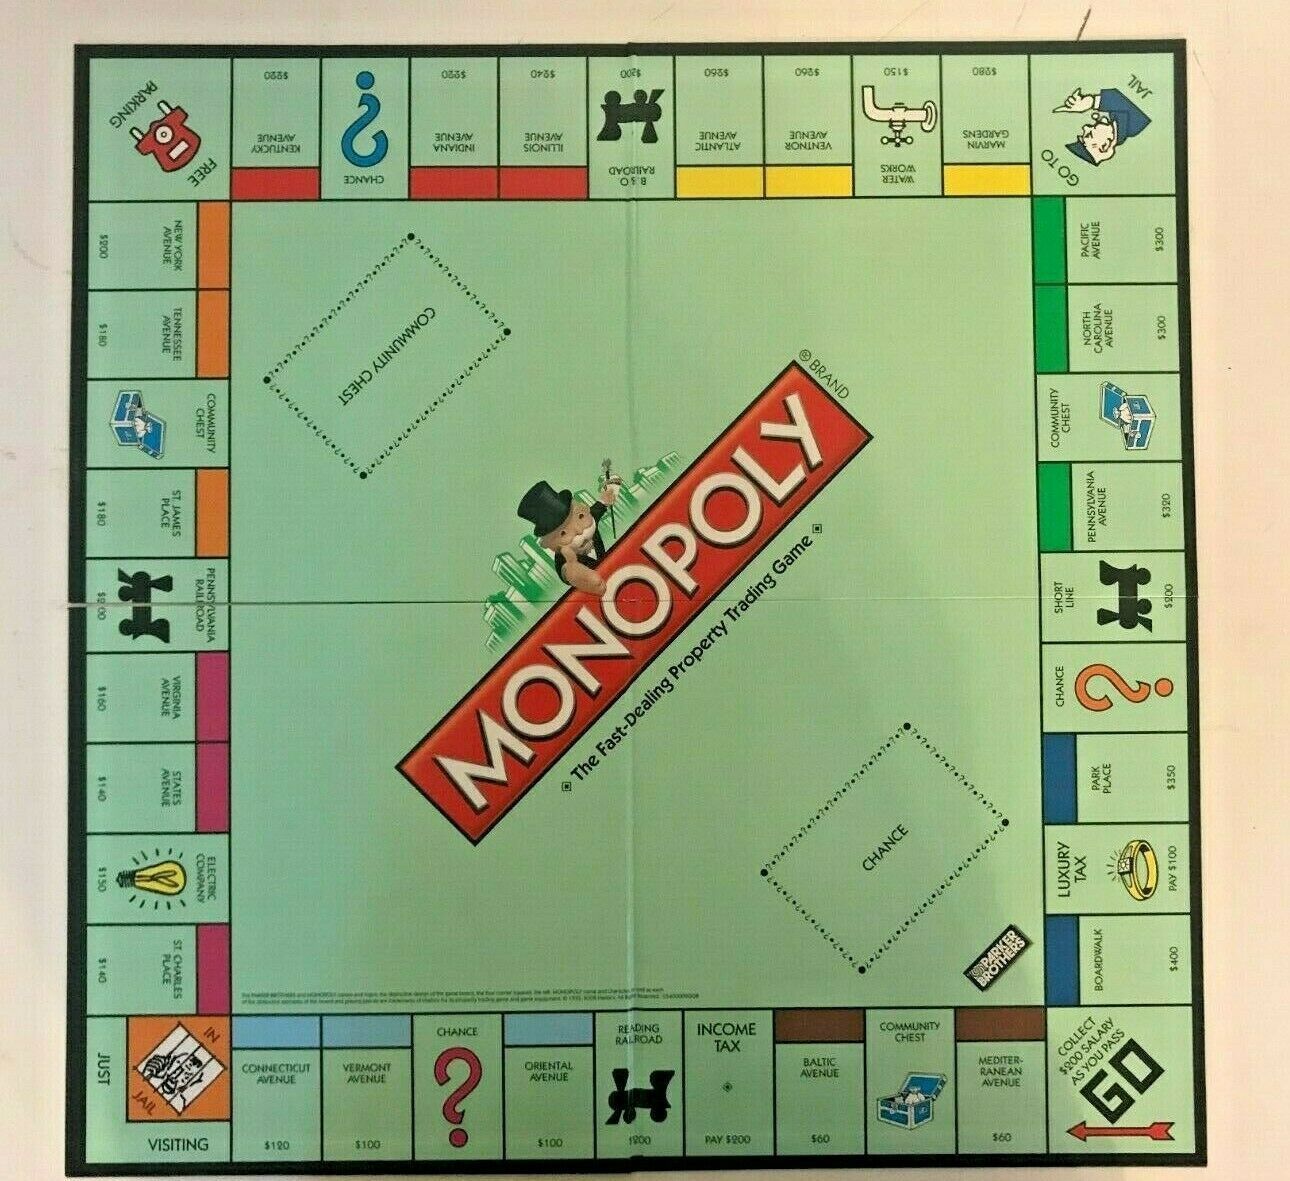 Monopoly board dimensions - bunnybpo